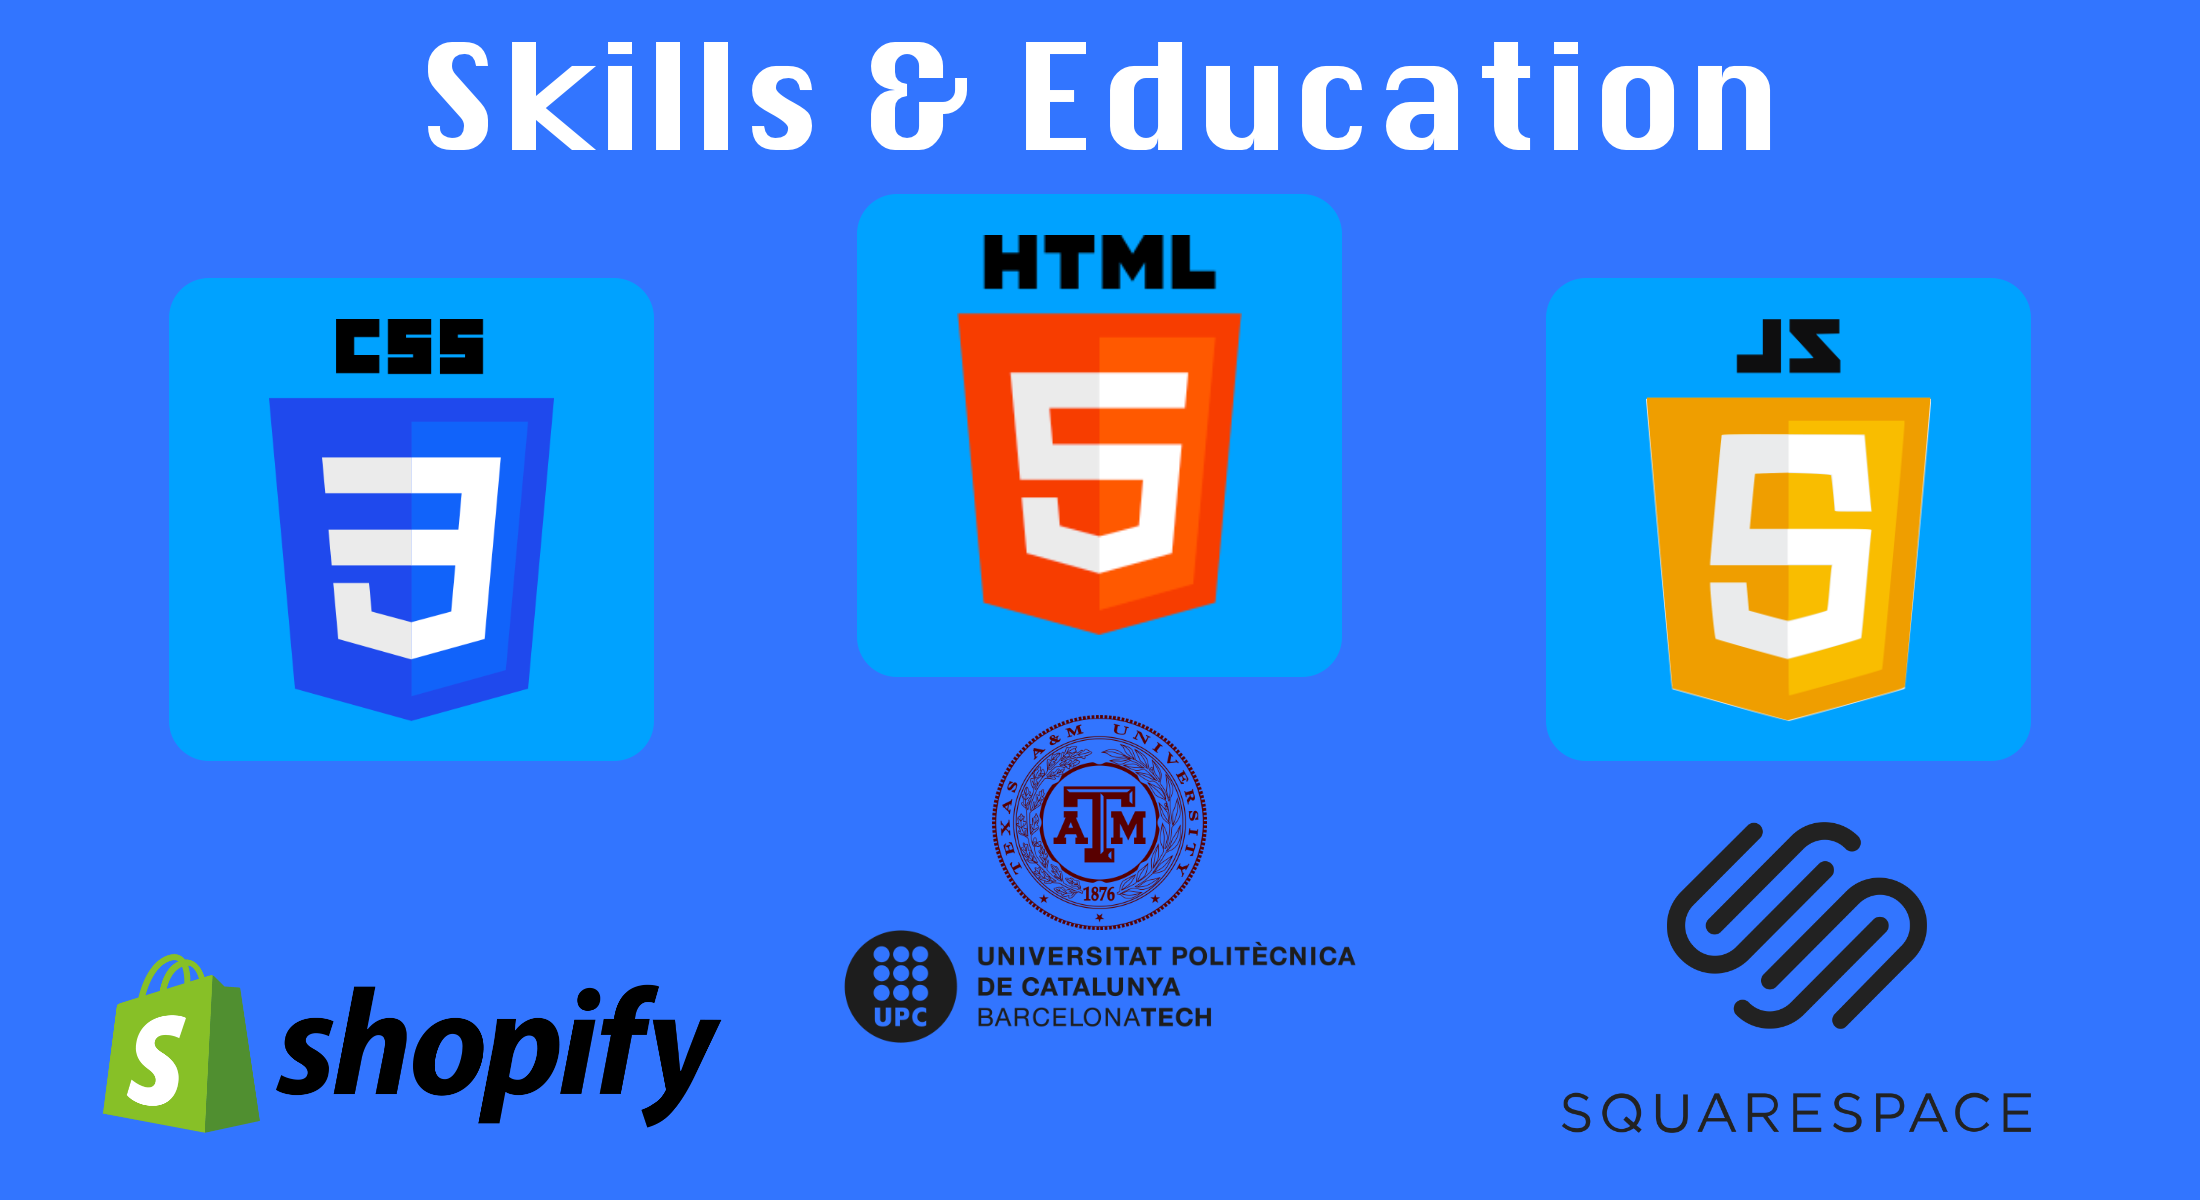 Will Rains Web Developer Skills and Education - HTML, CSS, Javascript, Shopify, Texas A&M, Universitat Politecnica de Catalunya